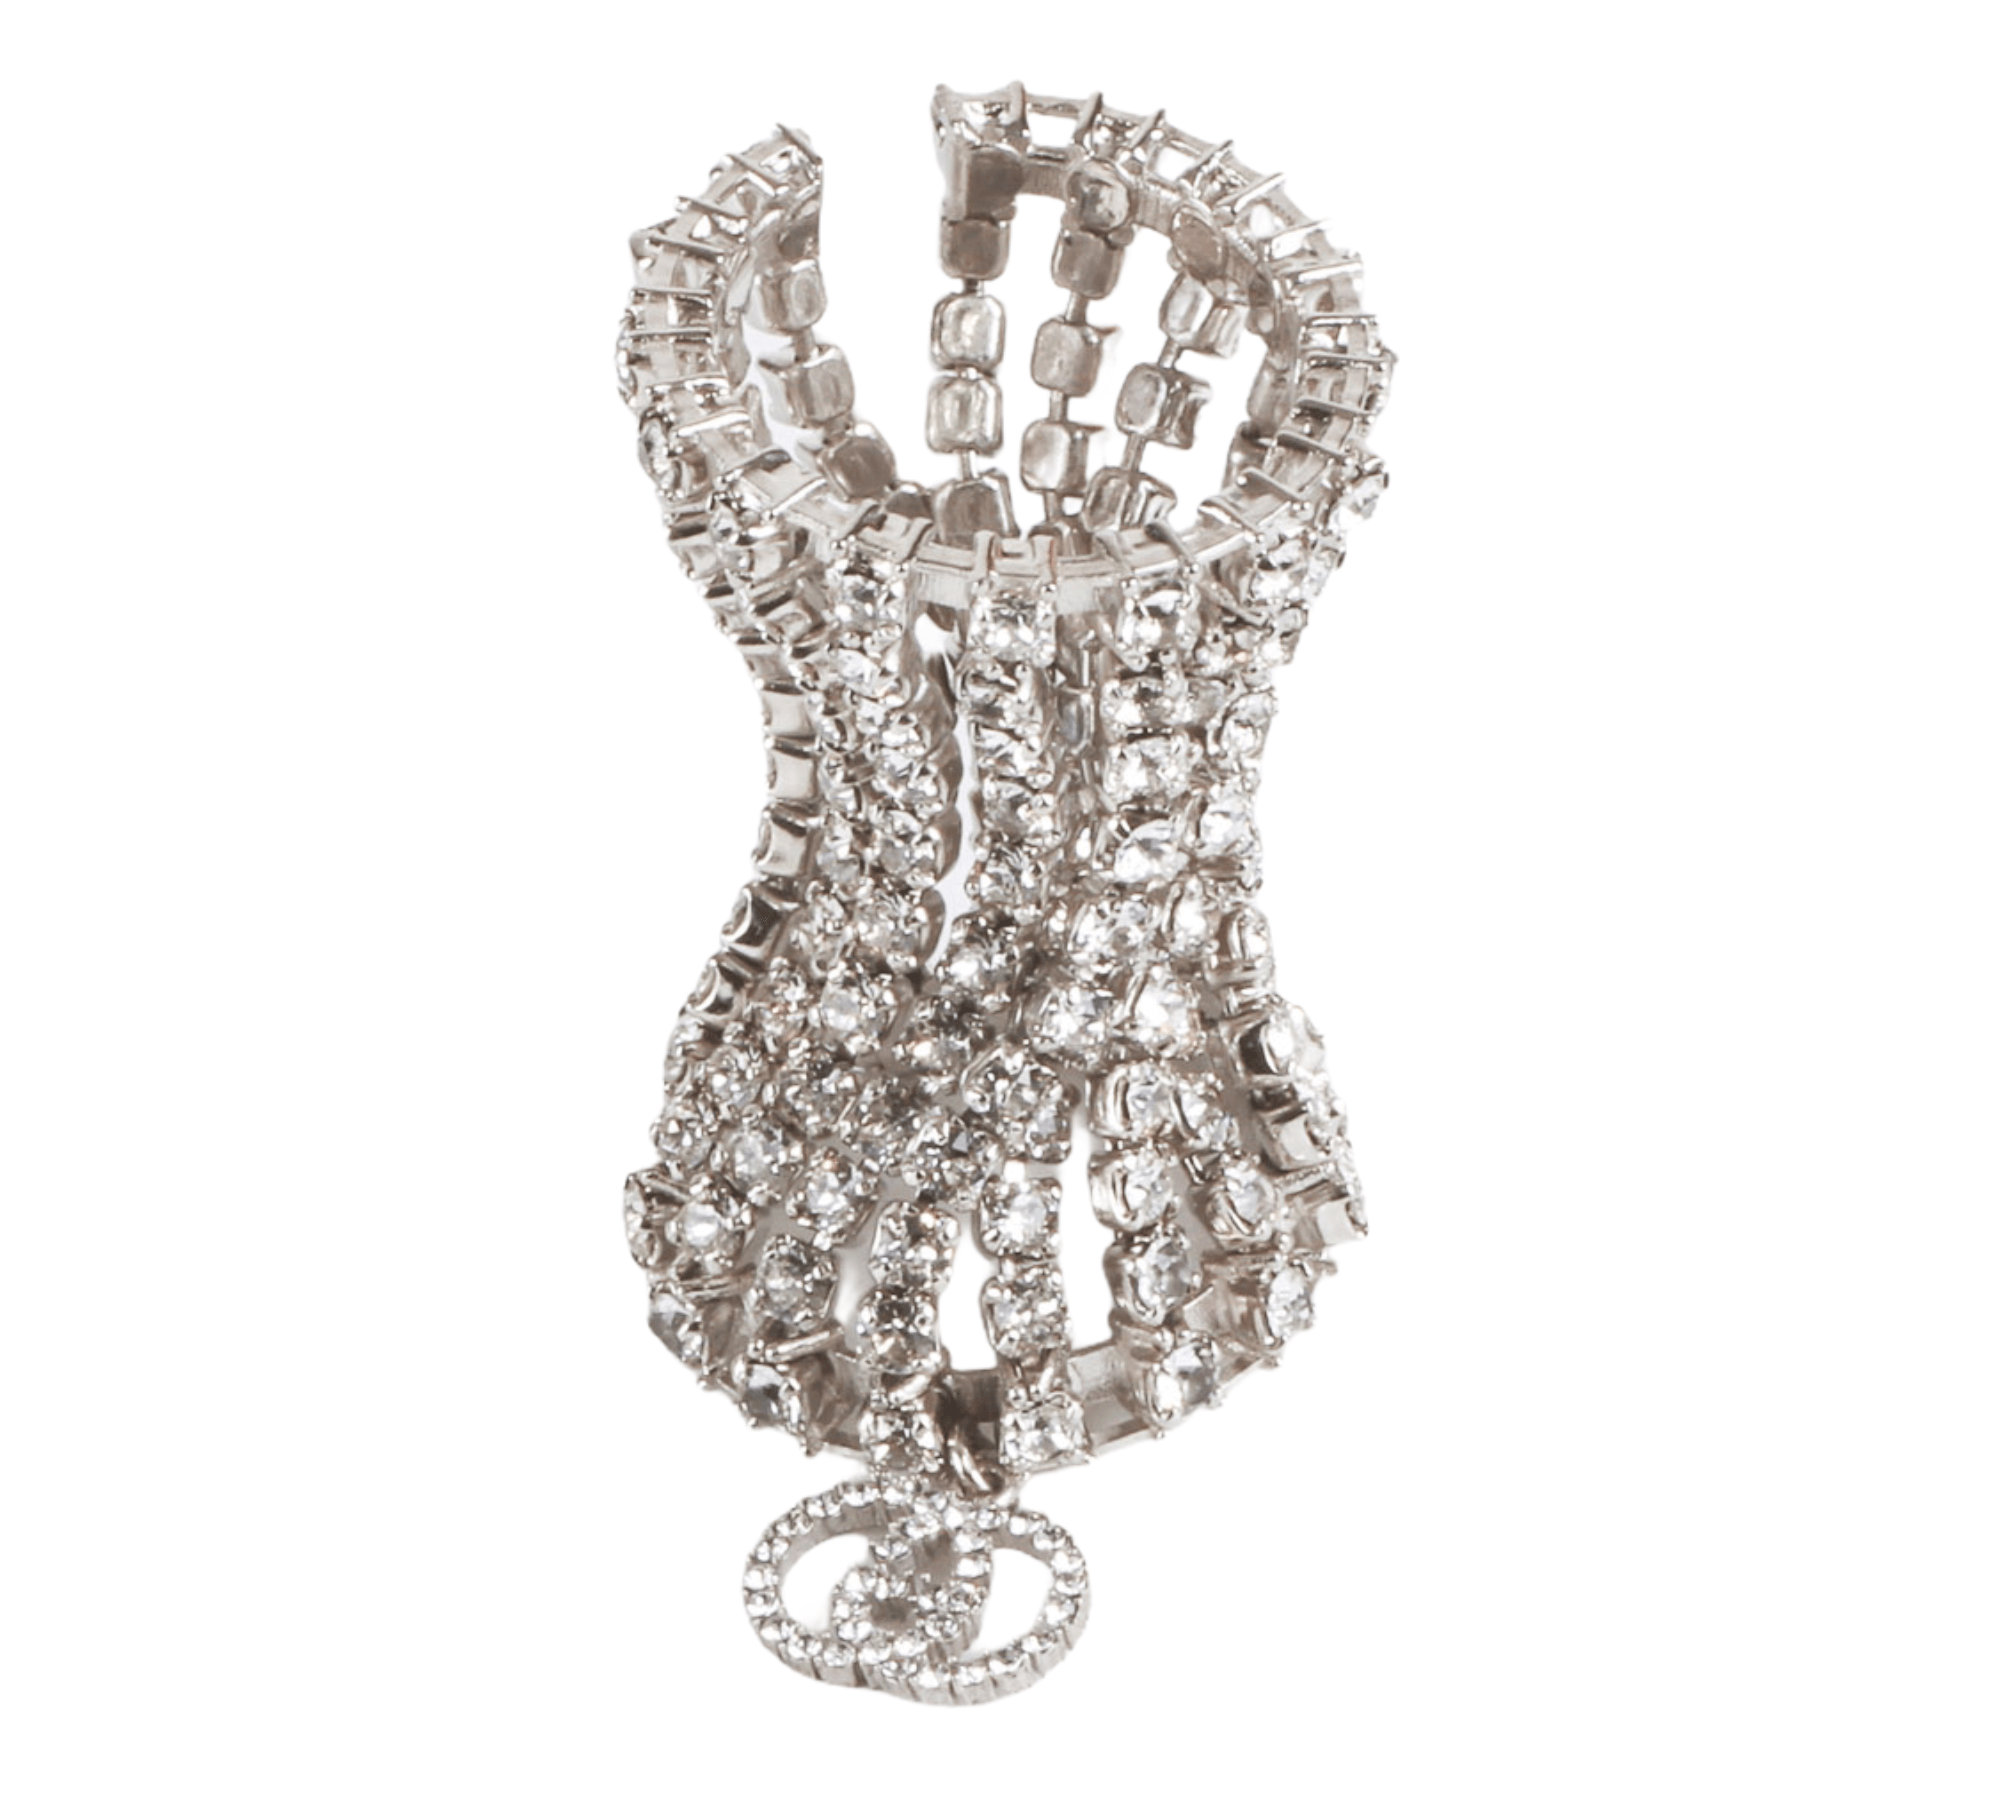 Gucci Silver & Crystals Interlocking GG Ring Size L 17.5